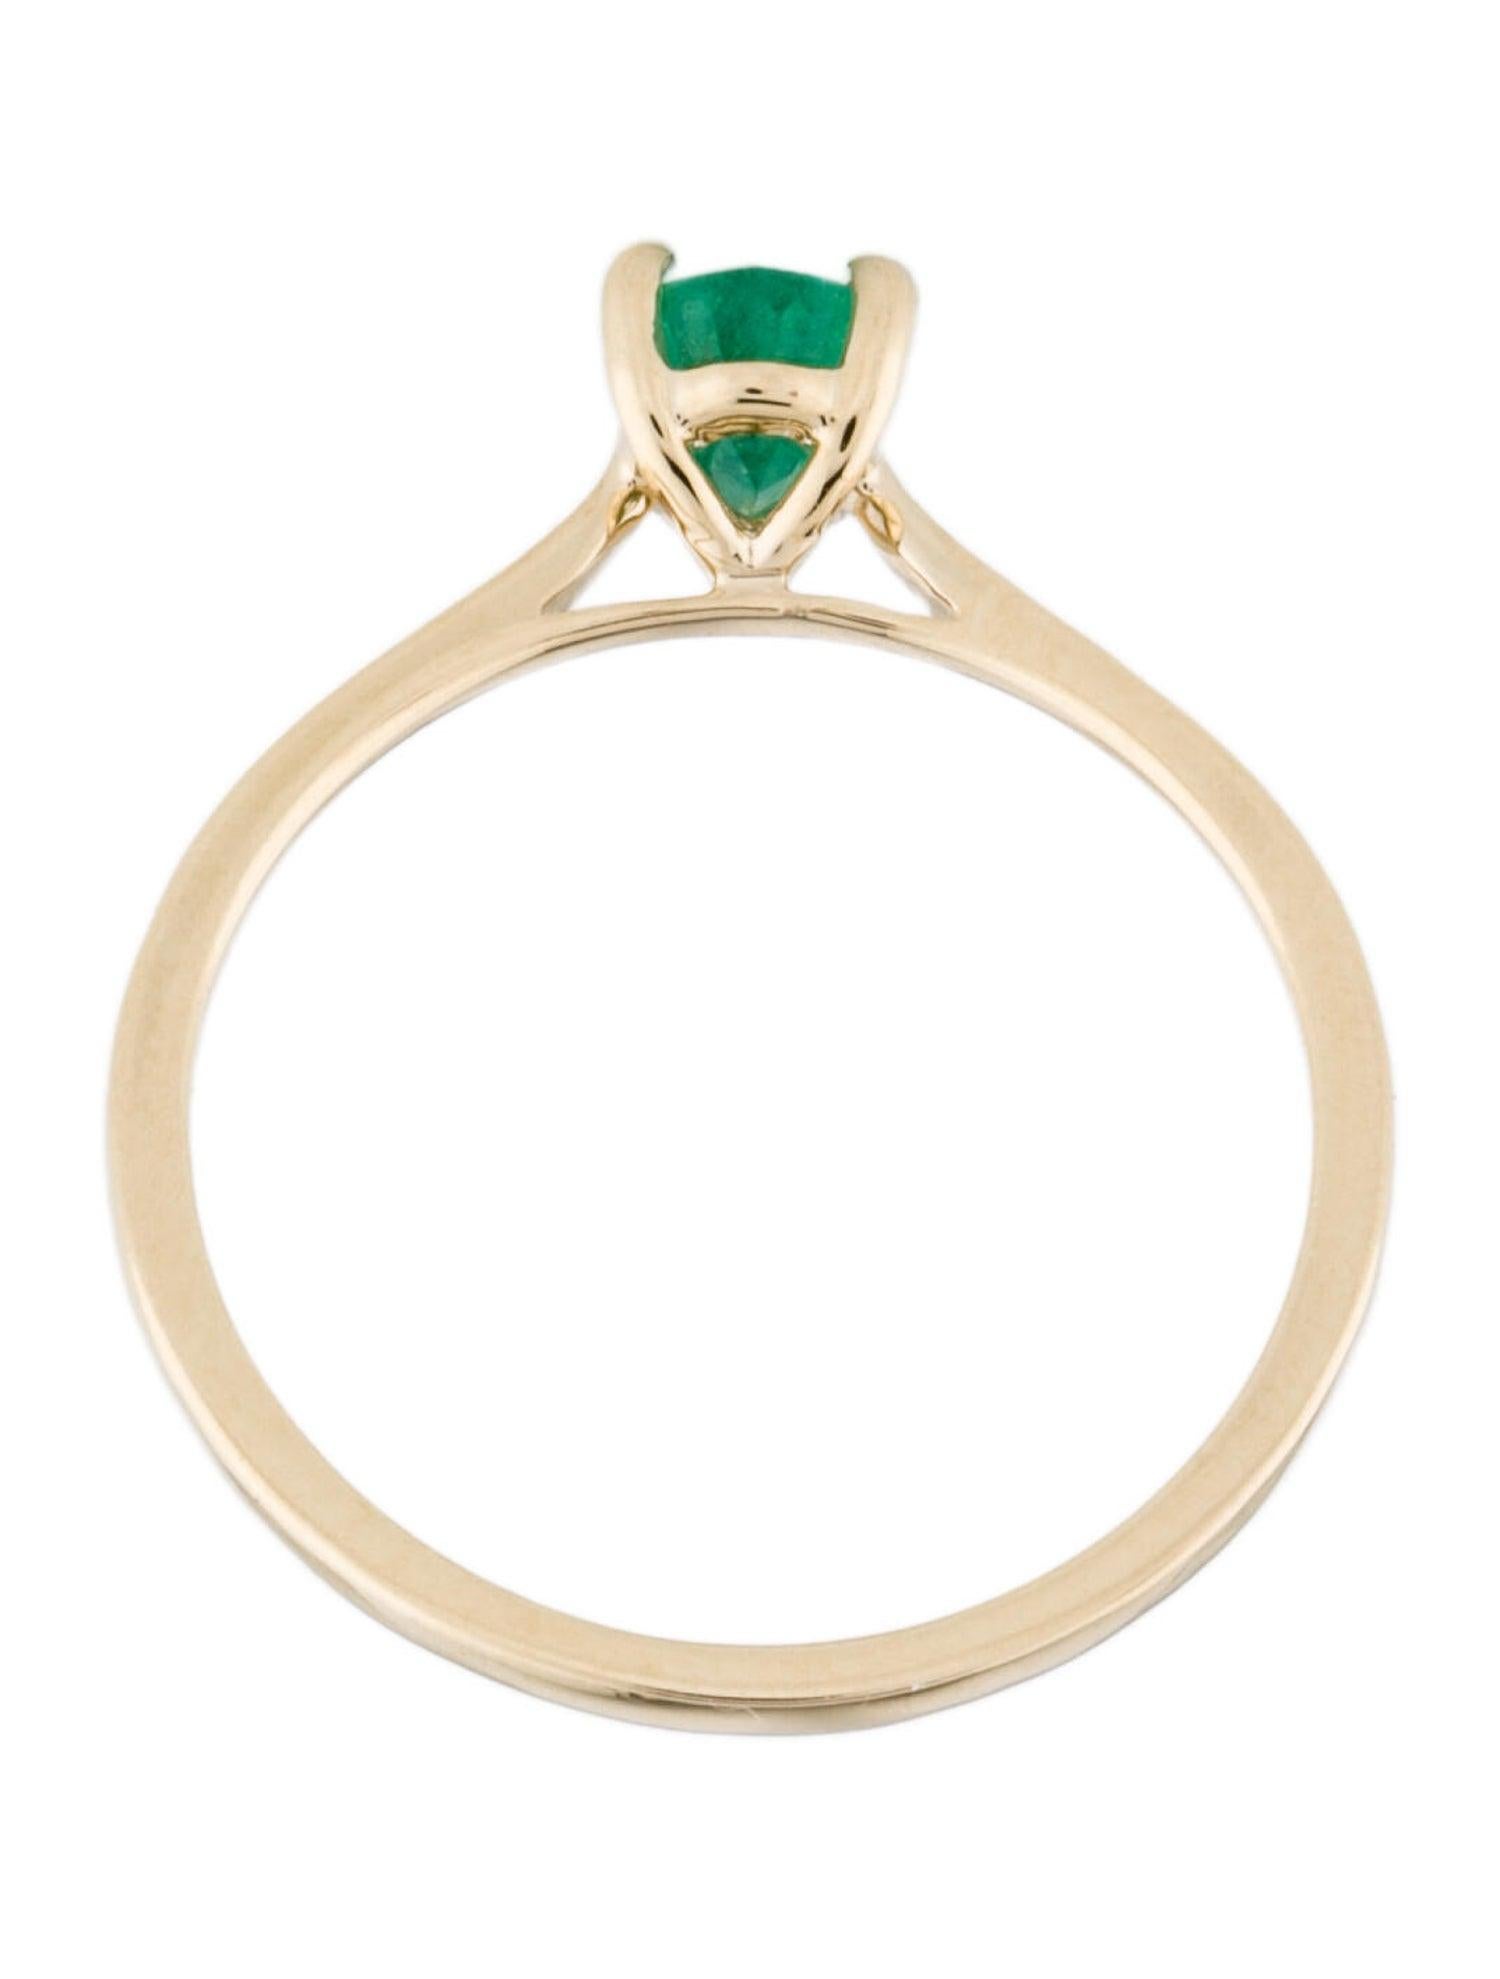 Women's Opulent 14K Emerald Cocktail Ring, Size 7 - Elegant Statement Jewelry